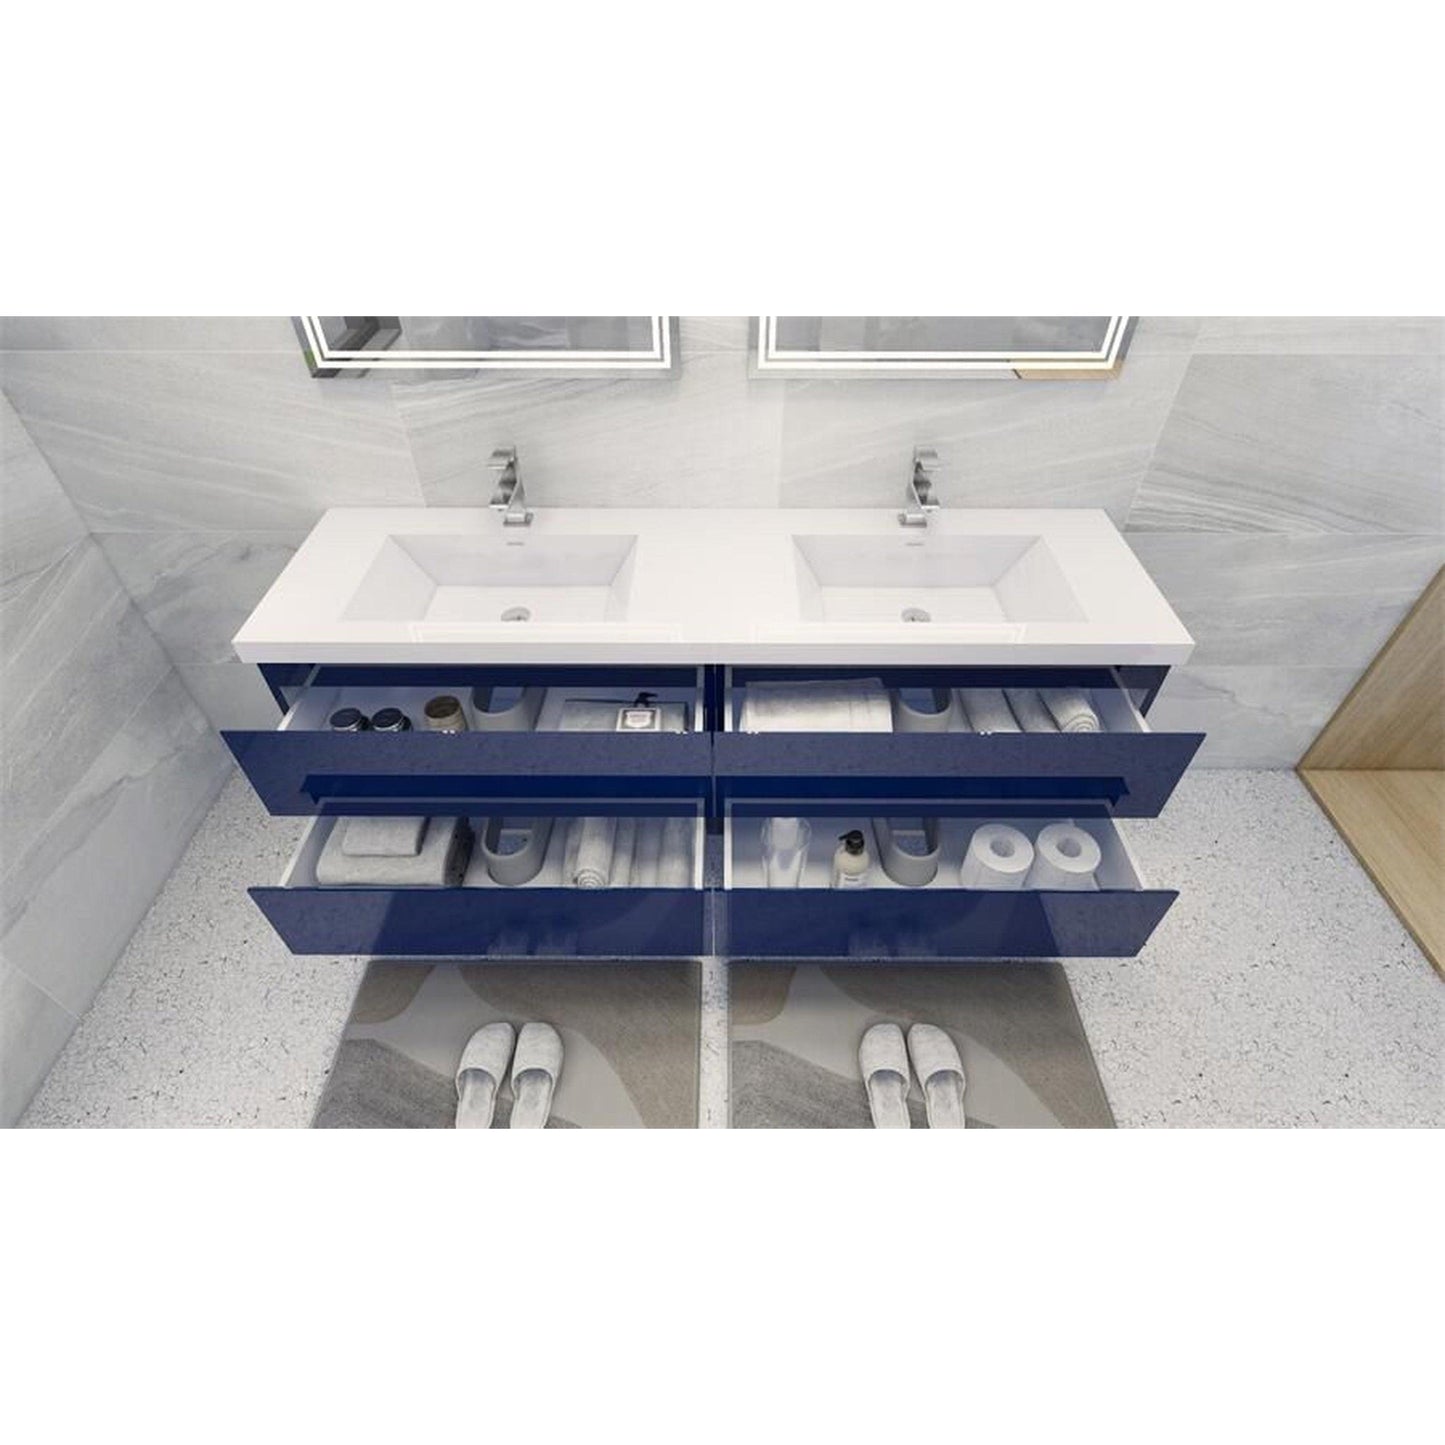 Moreno Bath Bohemia Lina 72" High Gloss Night Blue Wall-Mounted Vanity With Double Reinforced White Acrylic Sinks